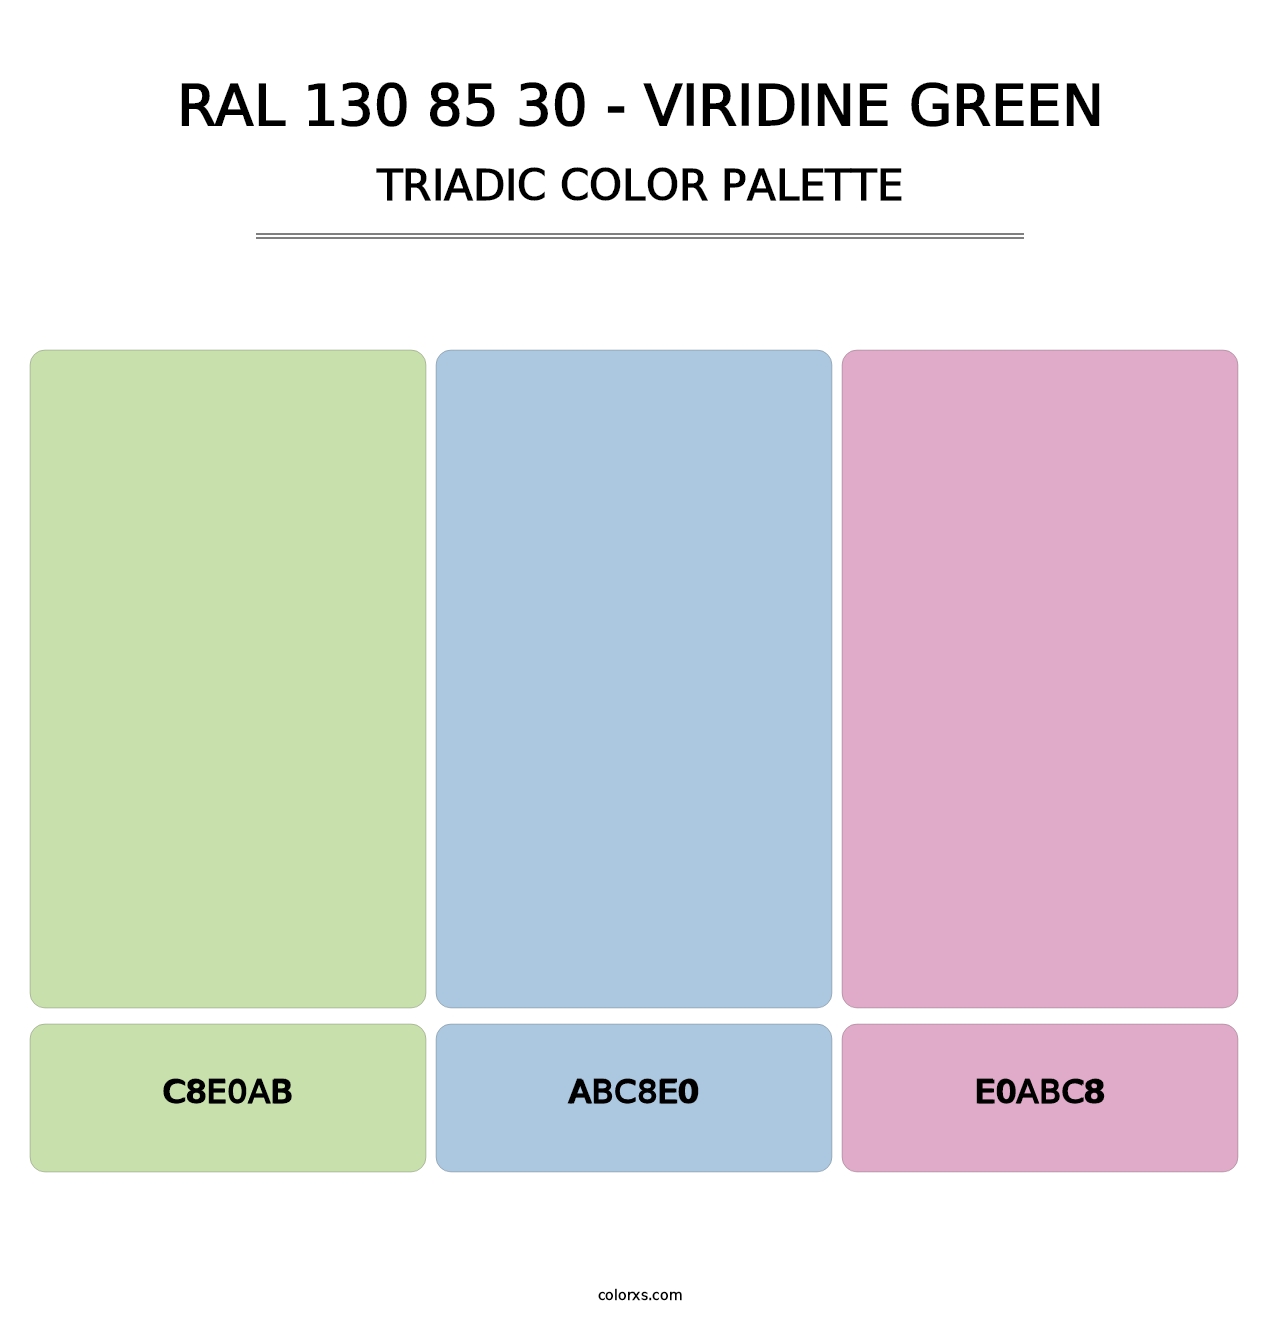 RAL 130 85 30 - Viridine Green - Triadic Color Palette